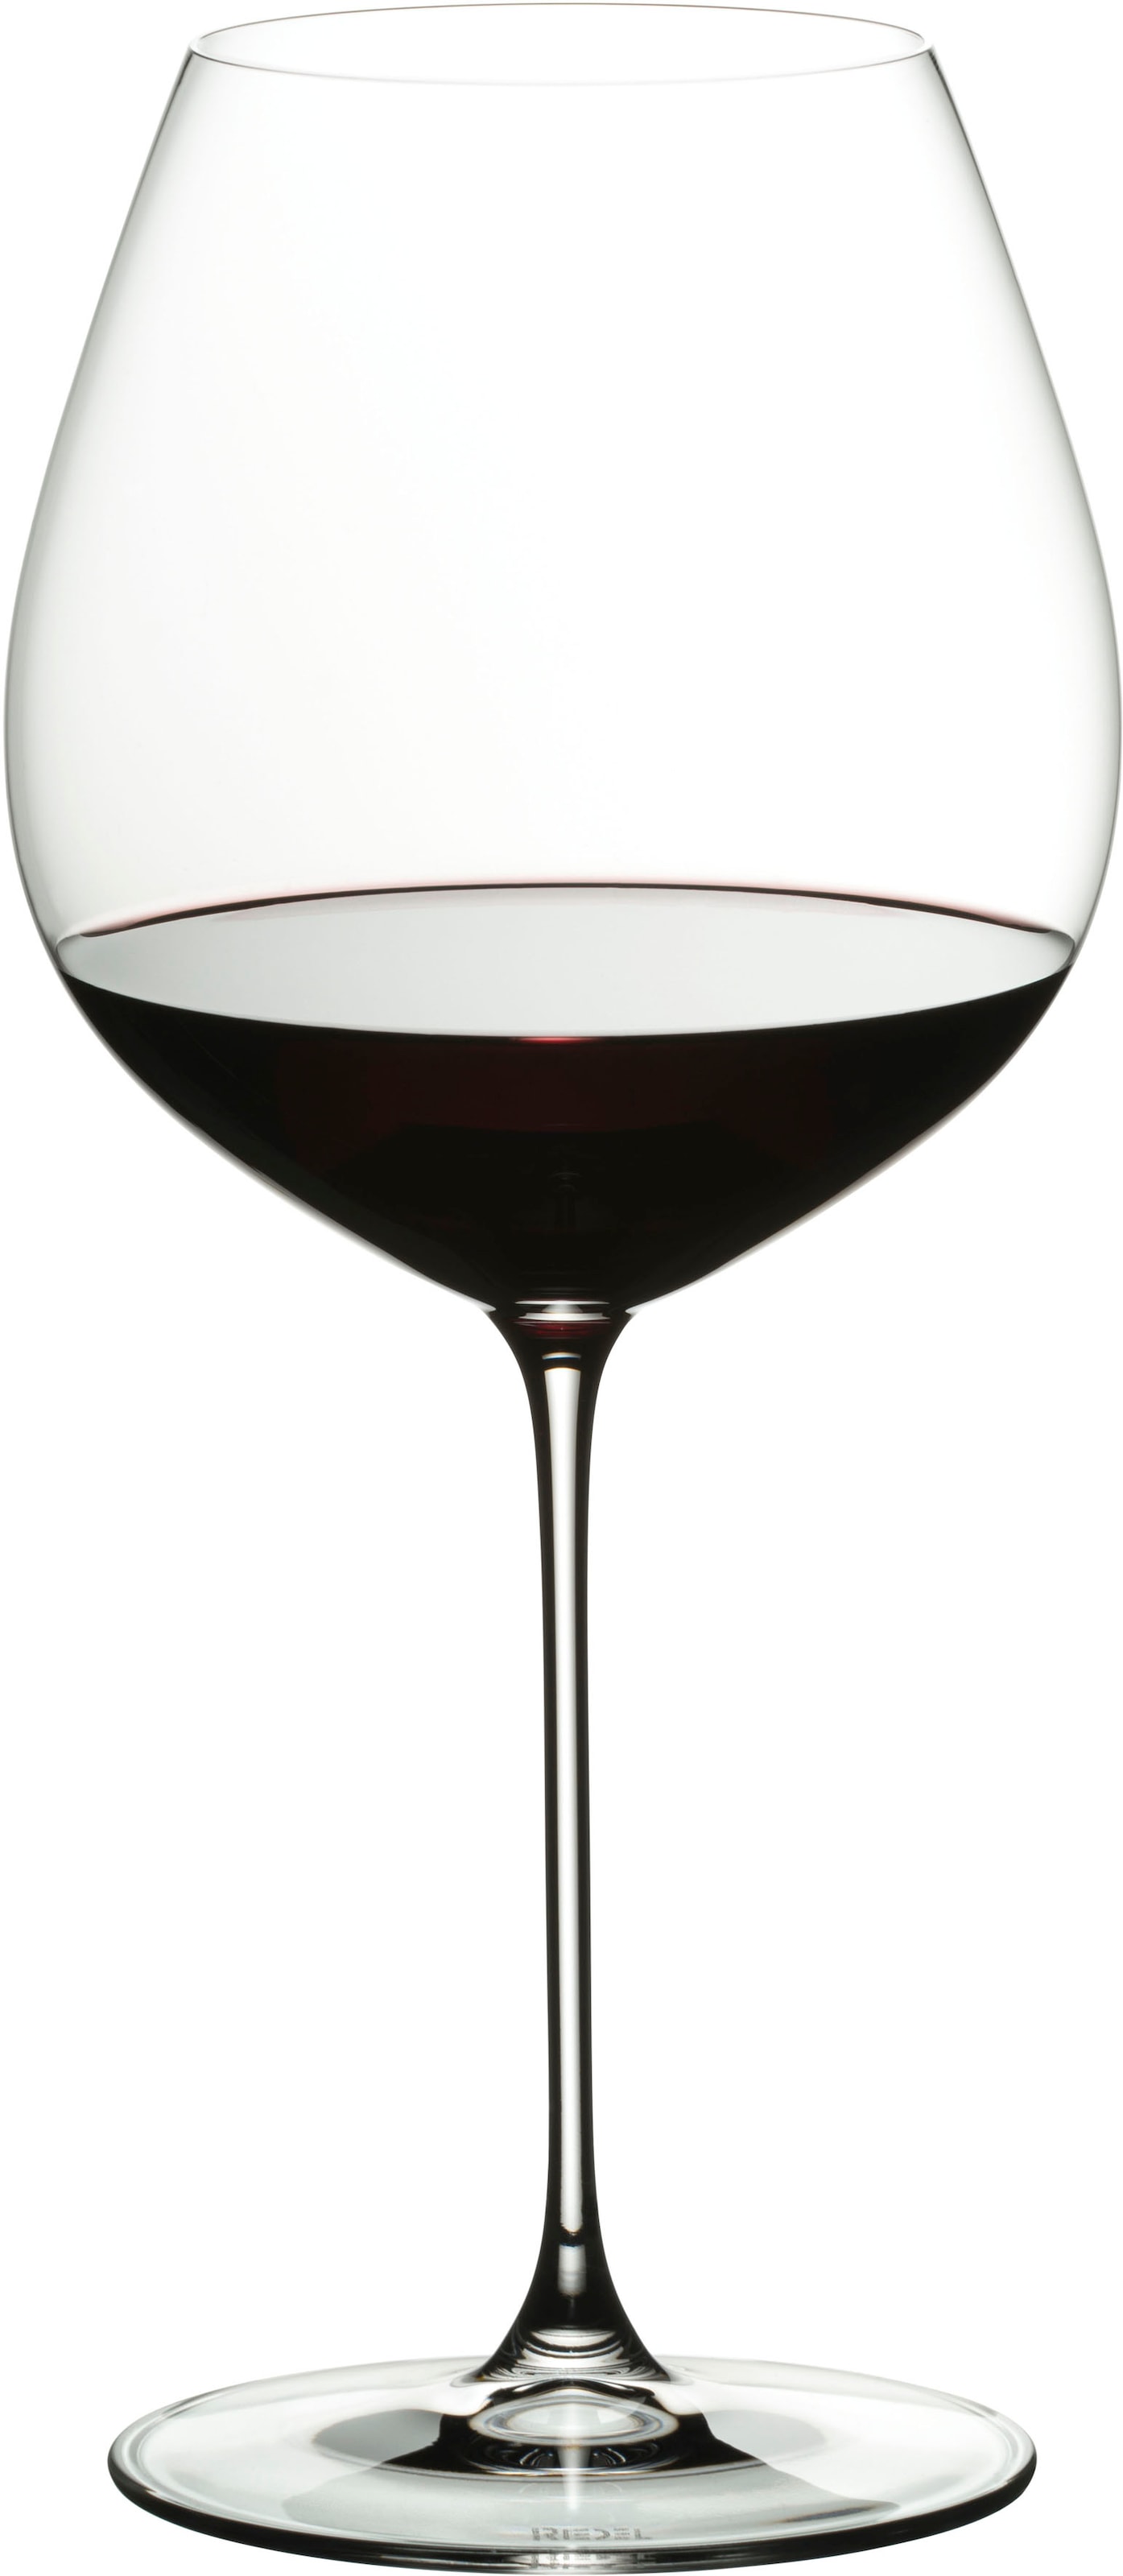 RIEDEL THE WINE GLASS COMPANY Rotweinglas »Veritas«, (Set, 2 tlg.), Made in Germany, 738 ml, 2-teilig